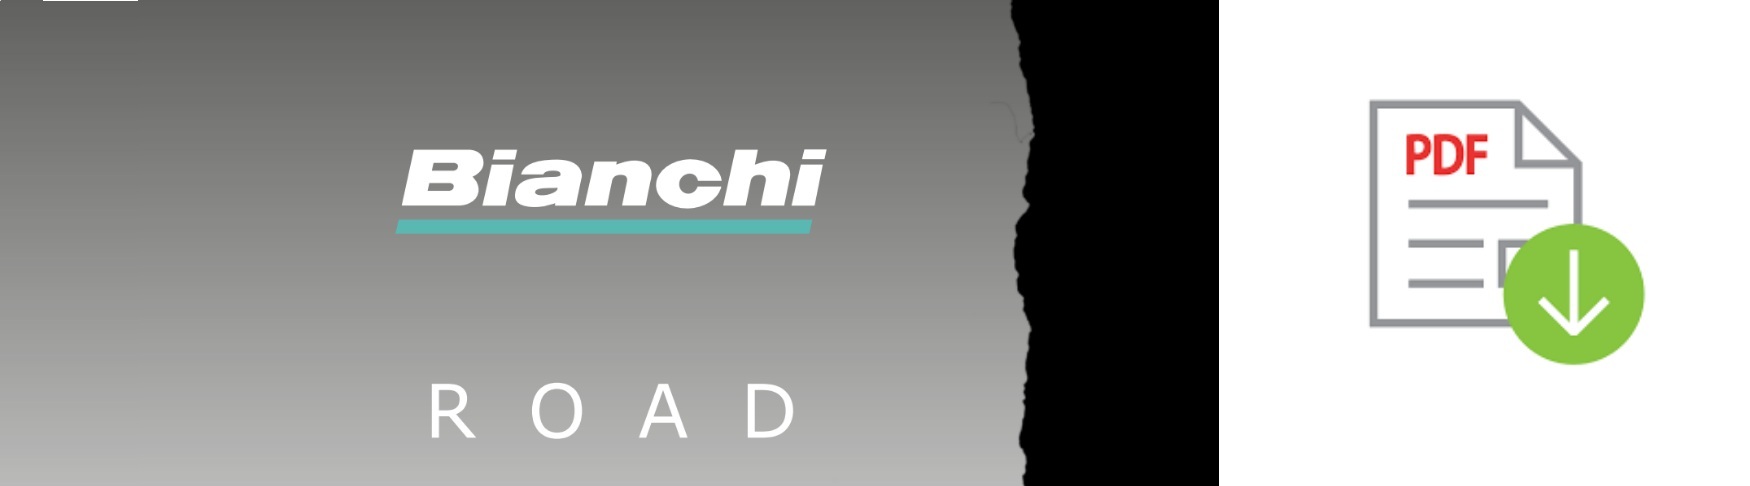 Bianchi Road PDF